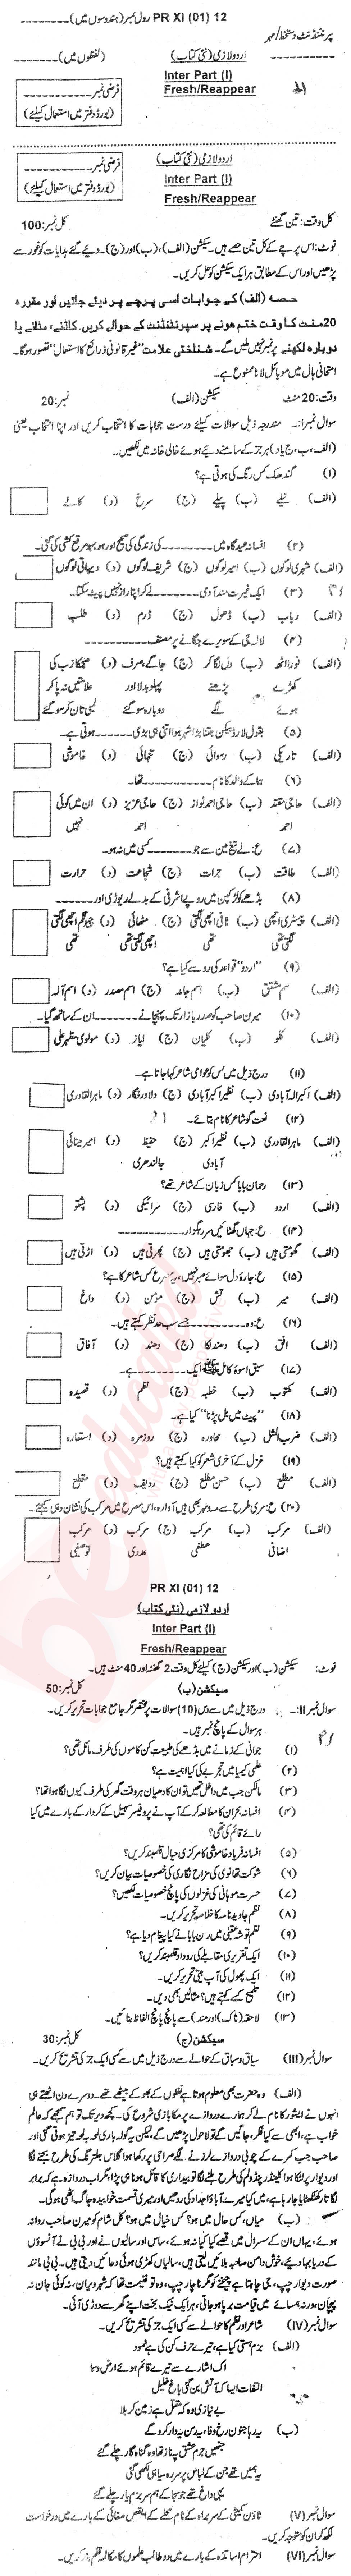 Urdu 11th class Past Paper Group 1 BISE Bannu 2012